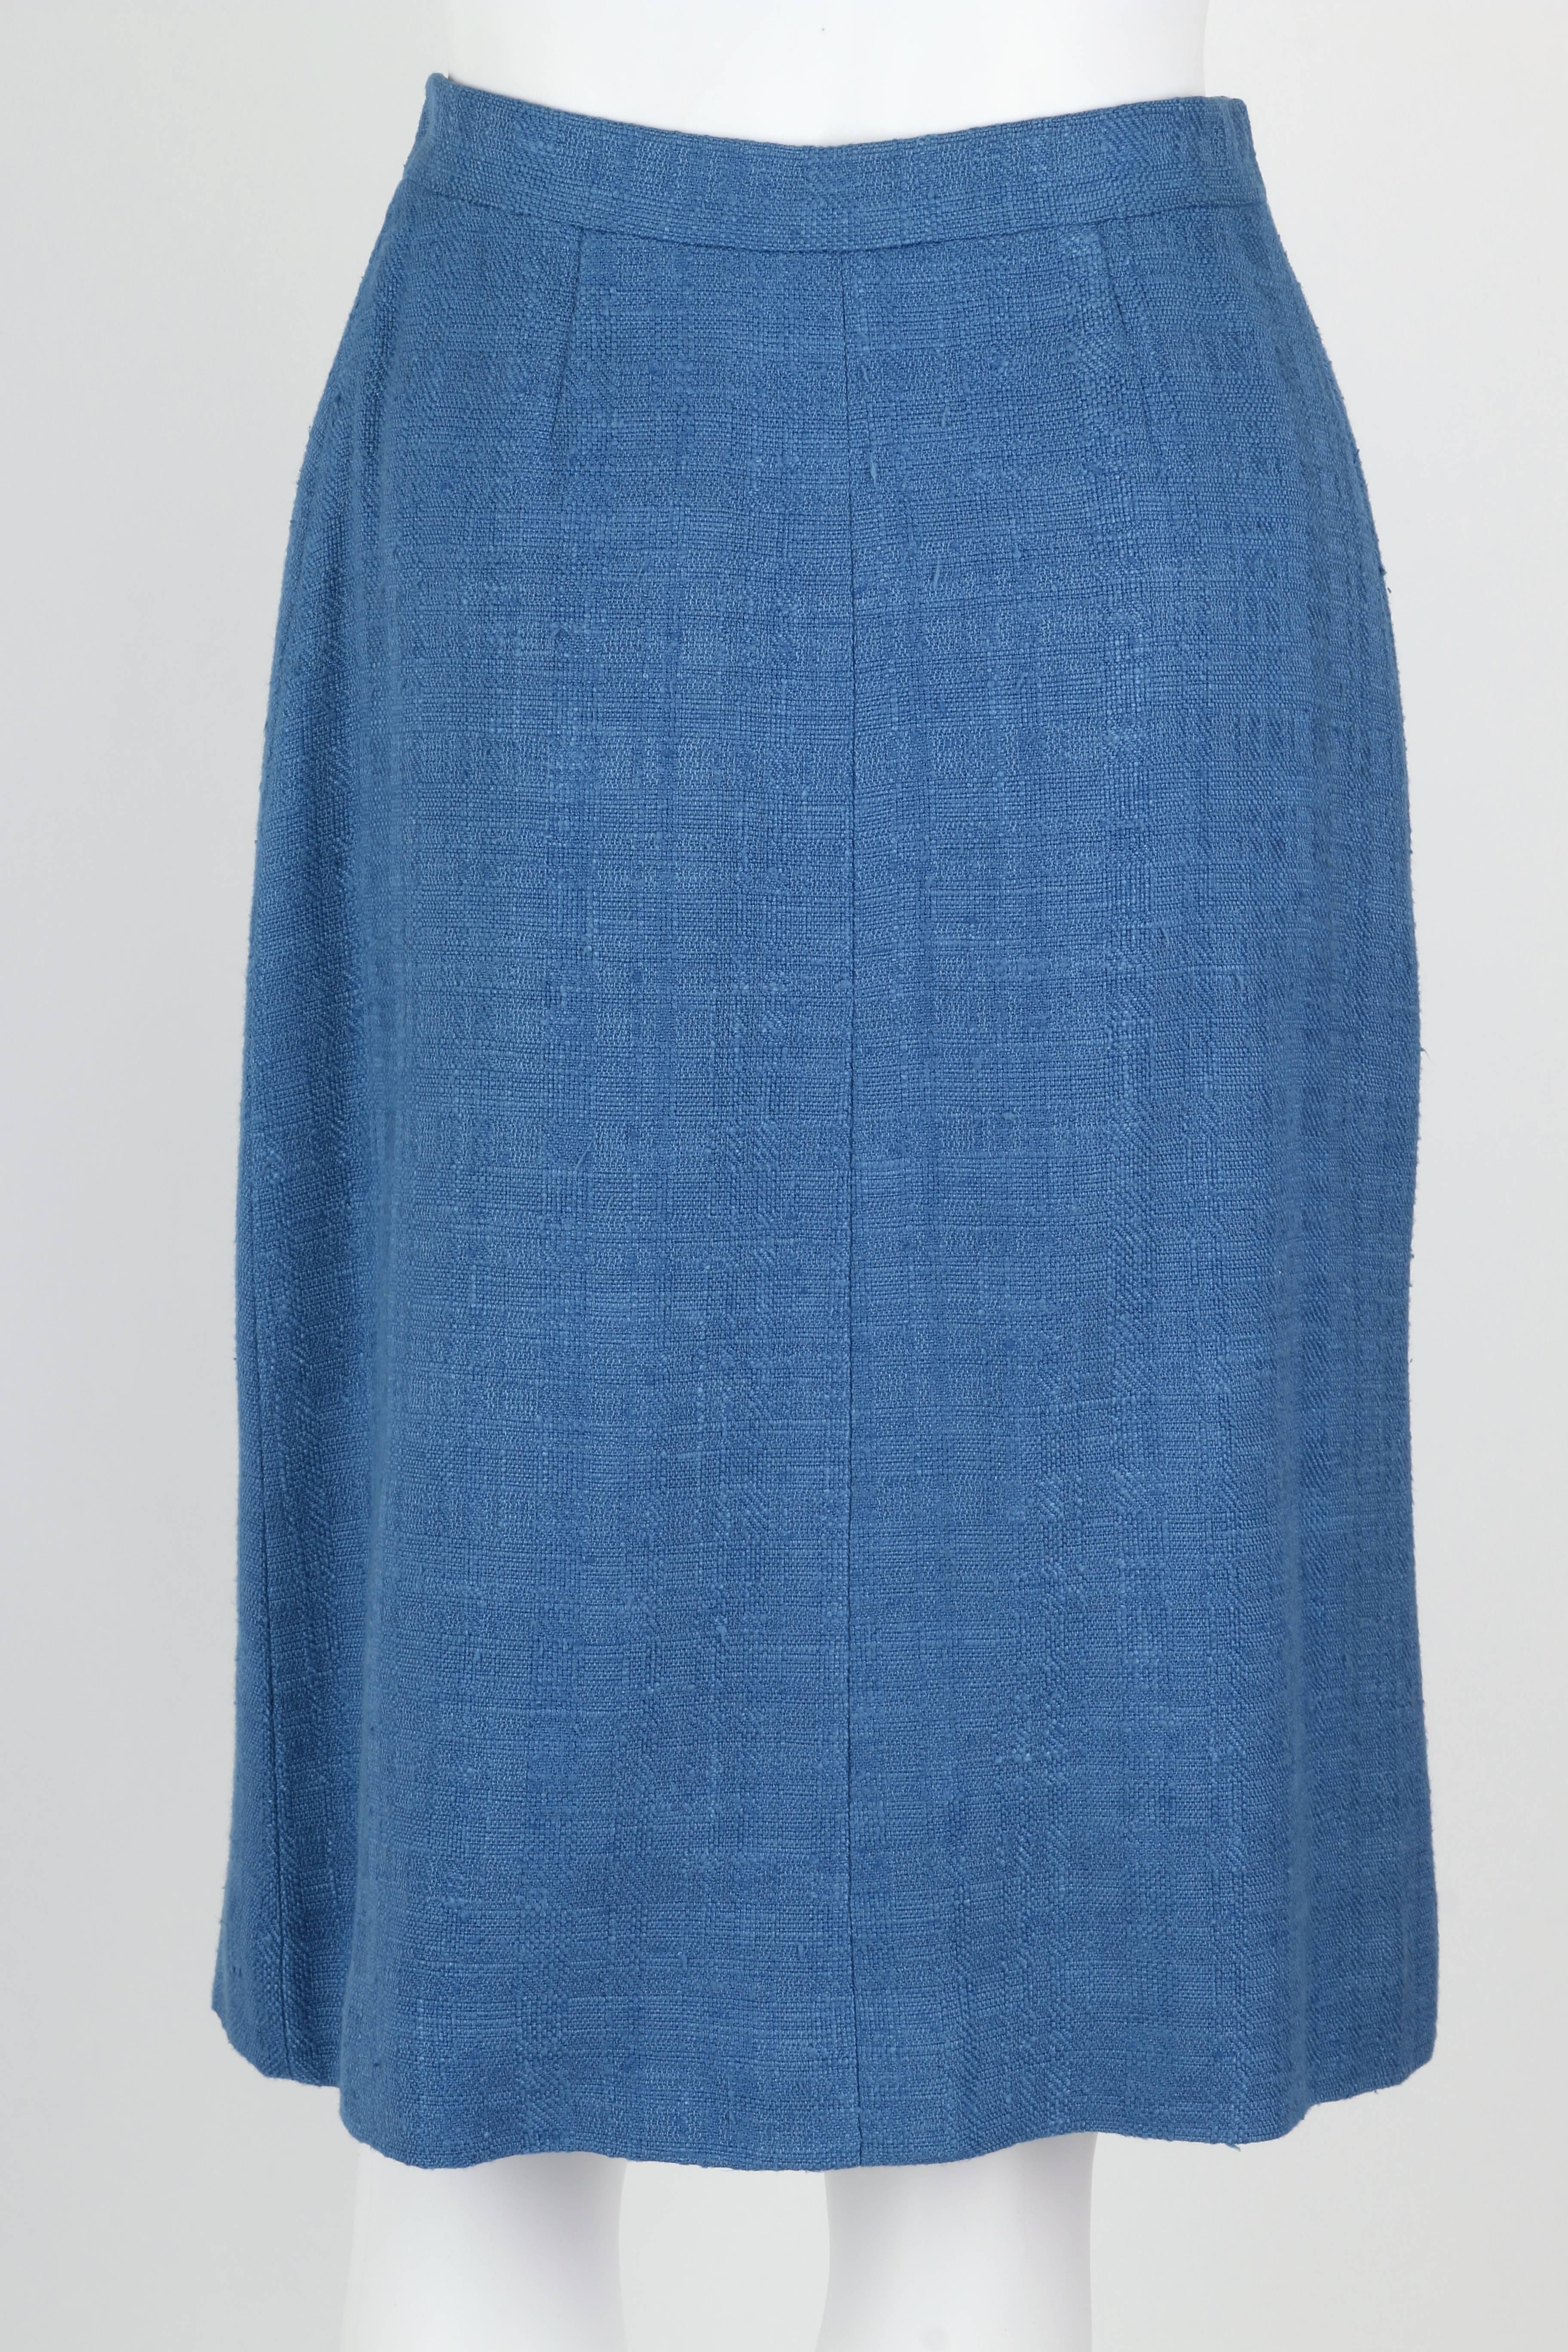 Women's HERMES PARIS c.1980's Blue Tweed Wrap Skirt White Leather Belt Detail Size 38